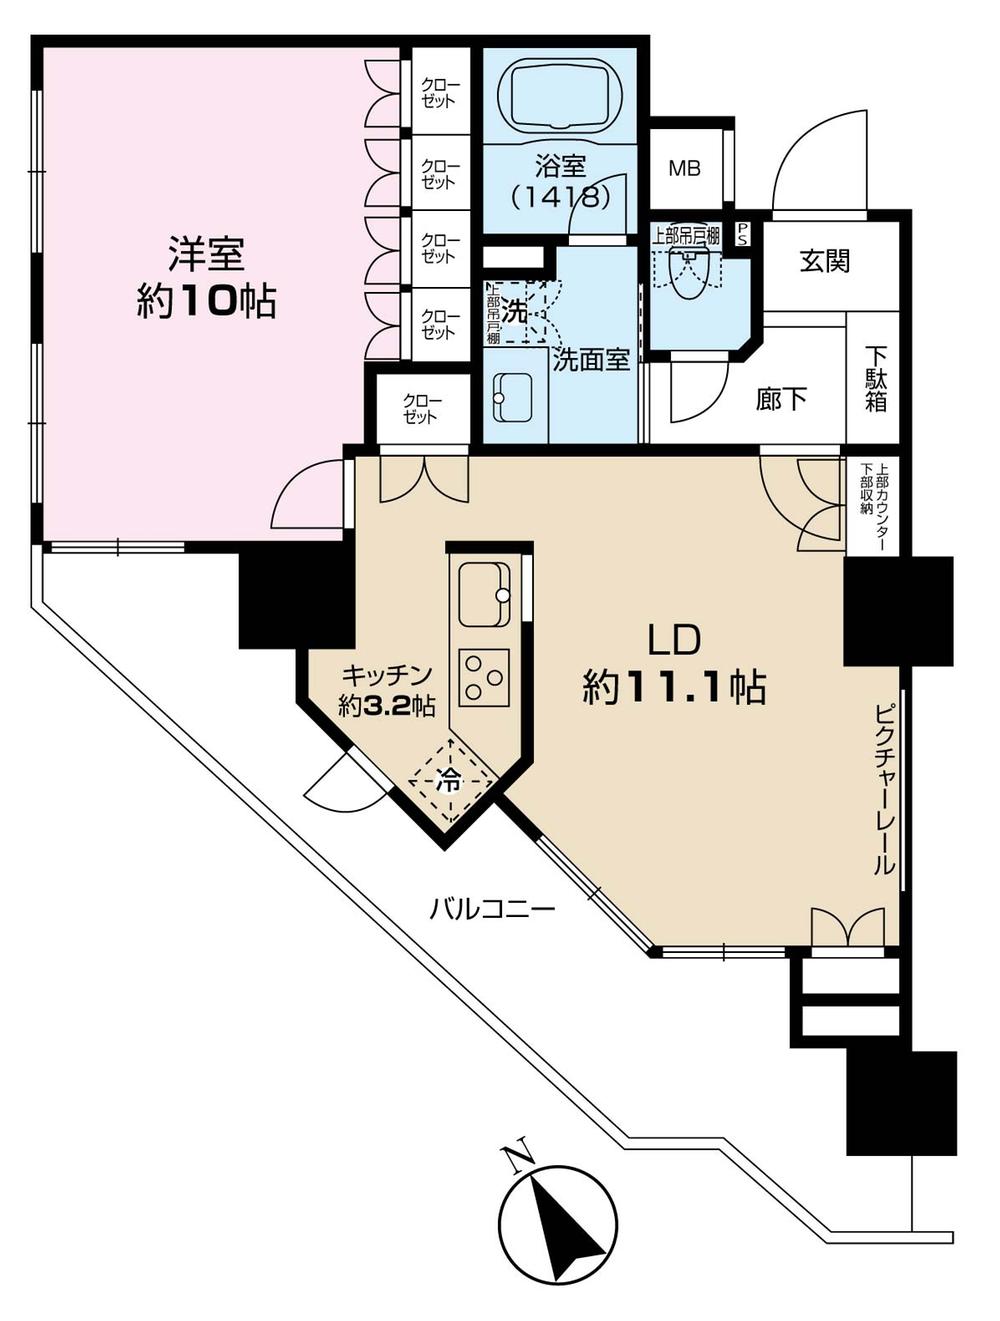 Floor plan. 1LDK, Price 51,800,000 yen, Footprint 57.3 sq m , Balcony area 16.41 sq m southwest corner room